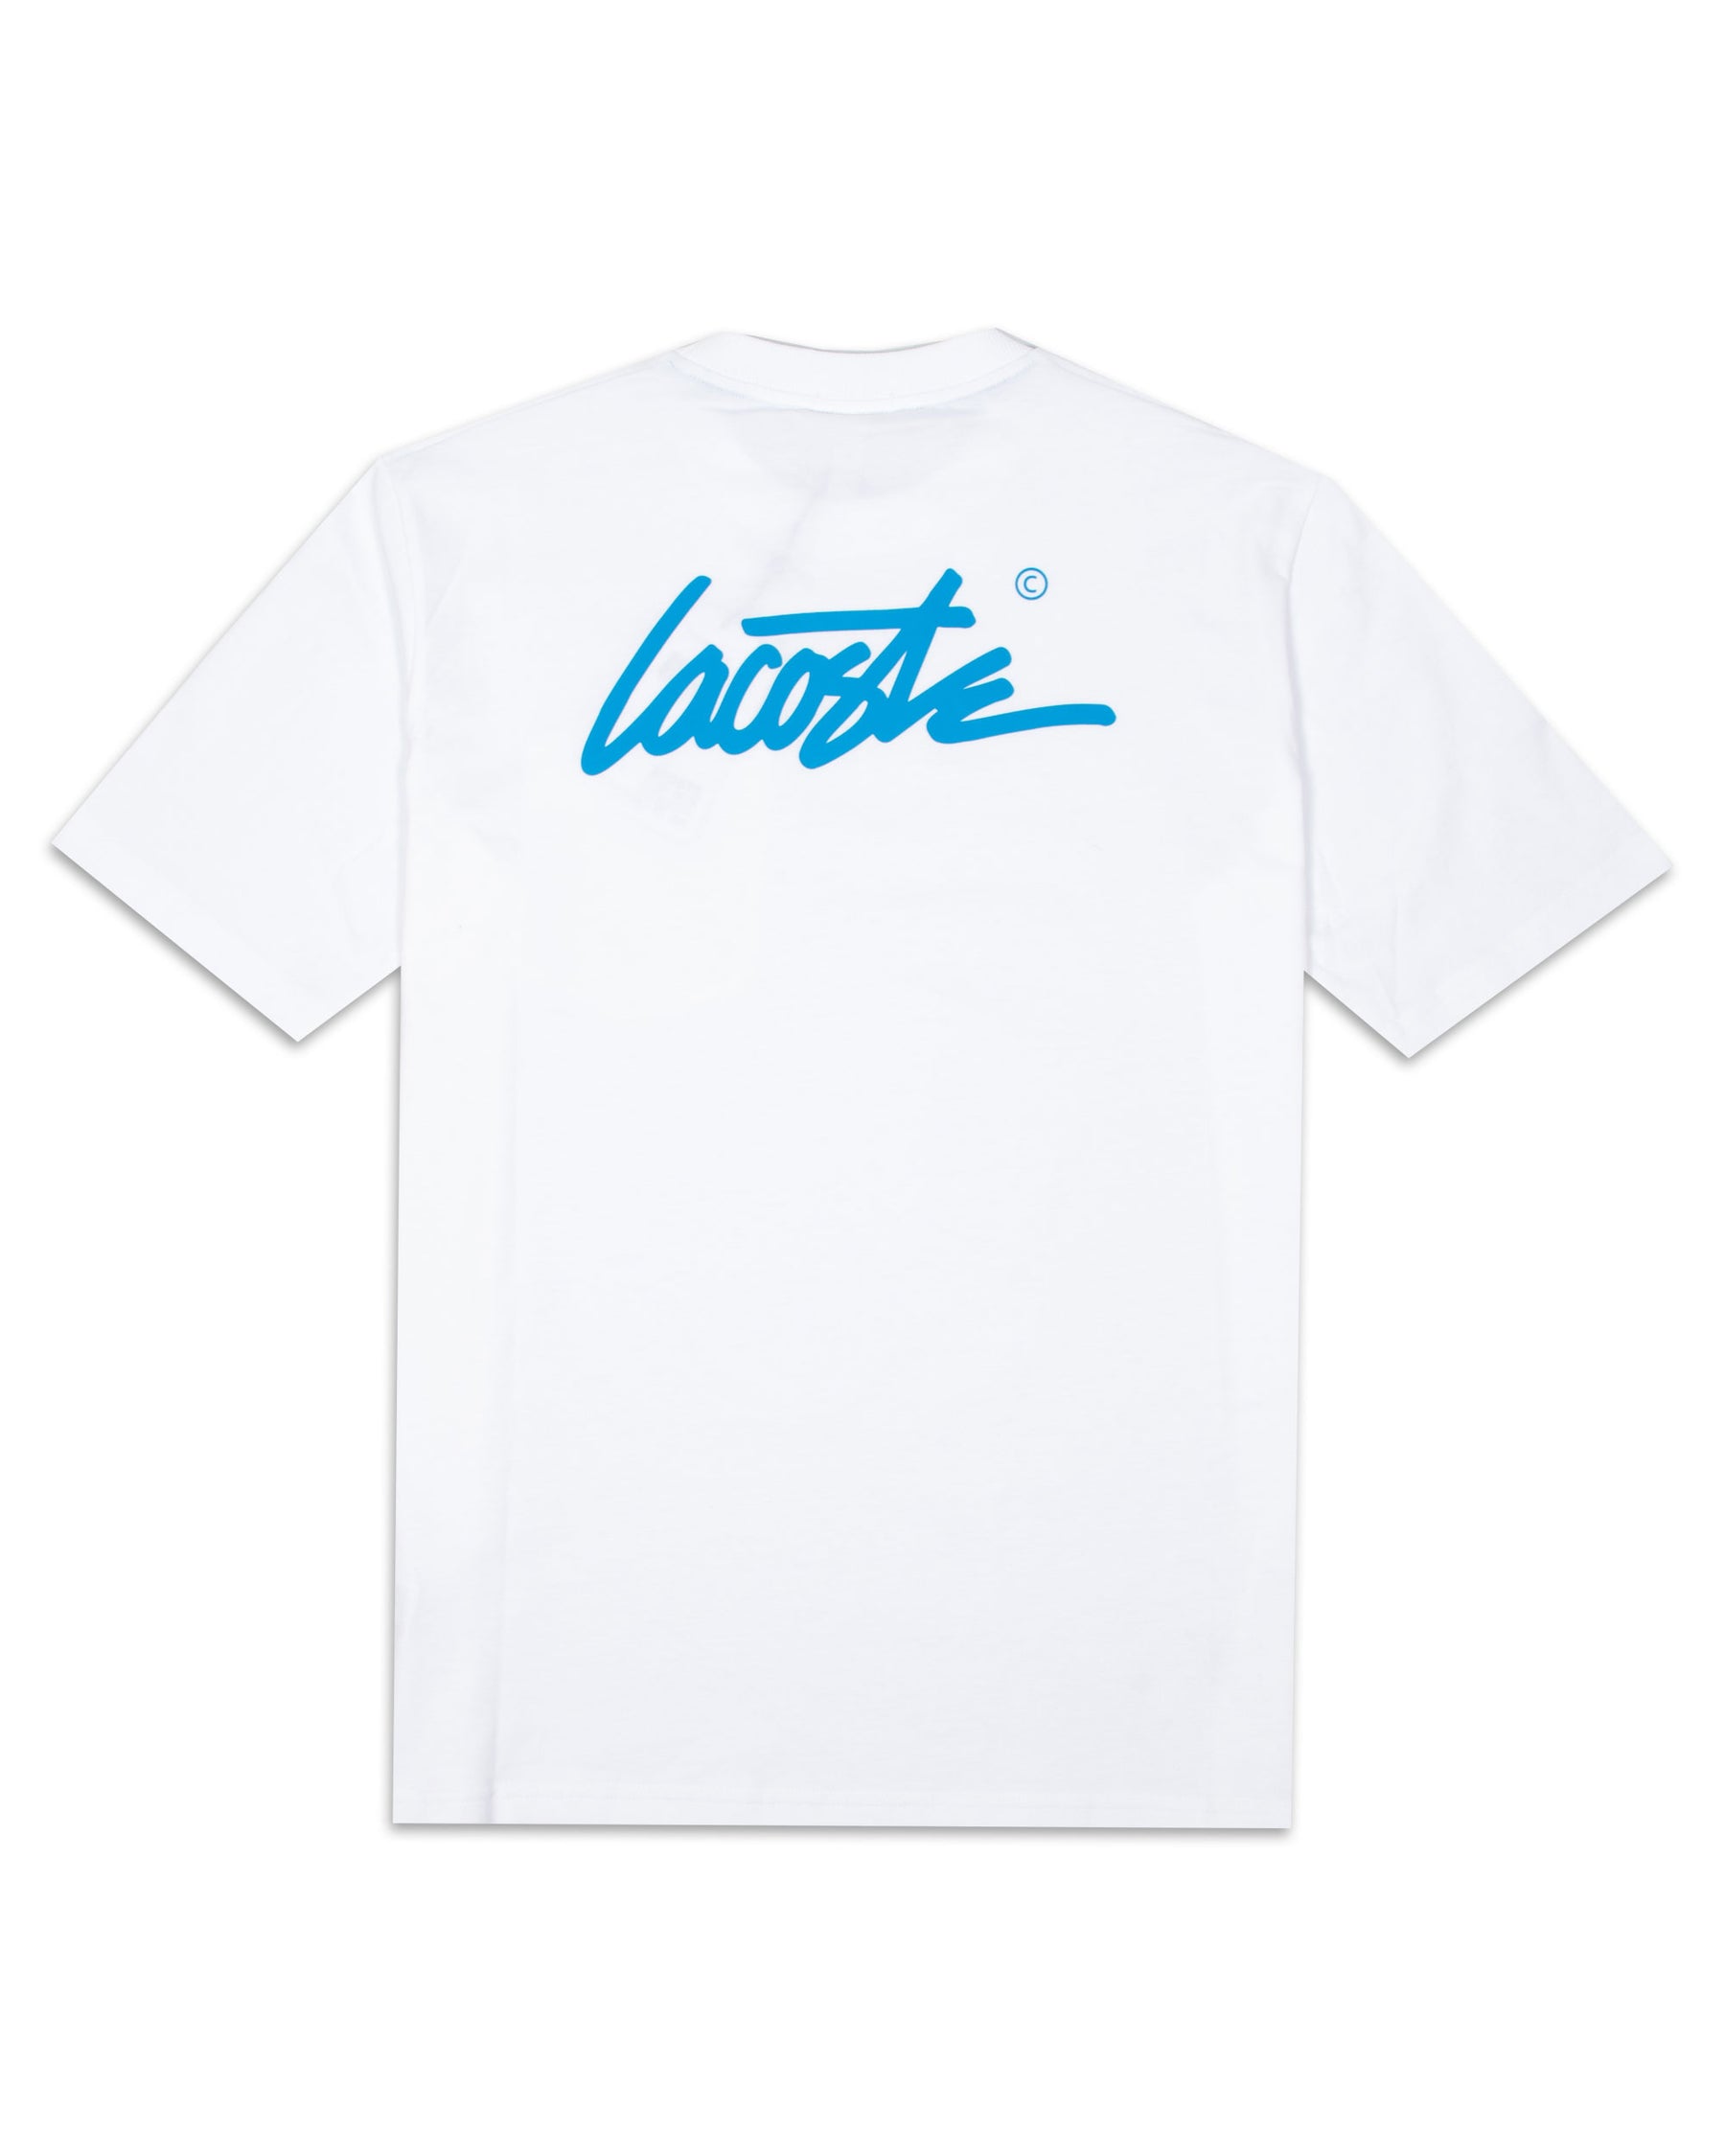 T-Shirt Lacoste Pocket Bianca